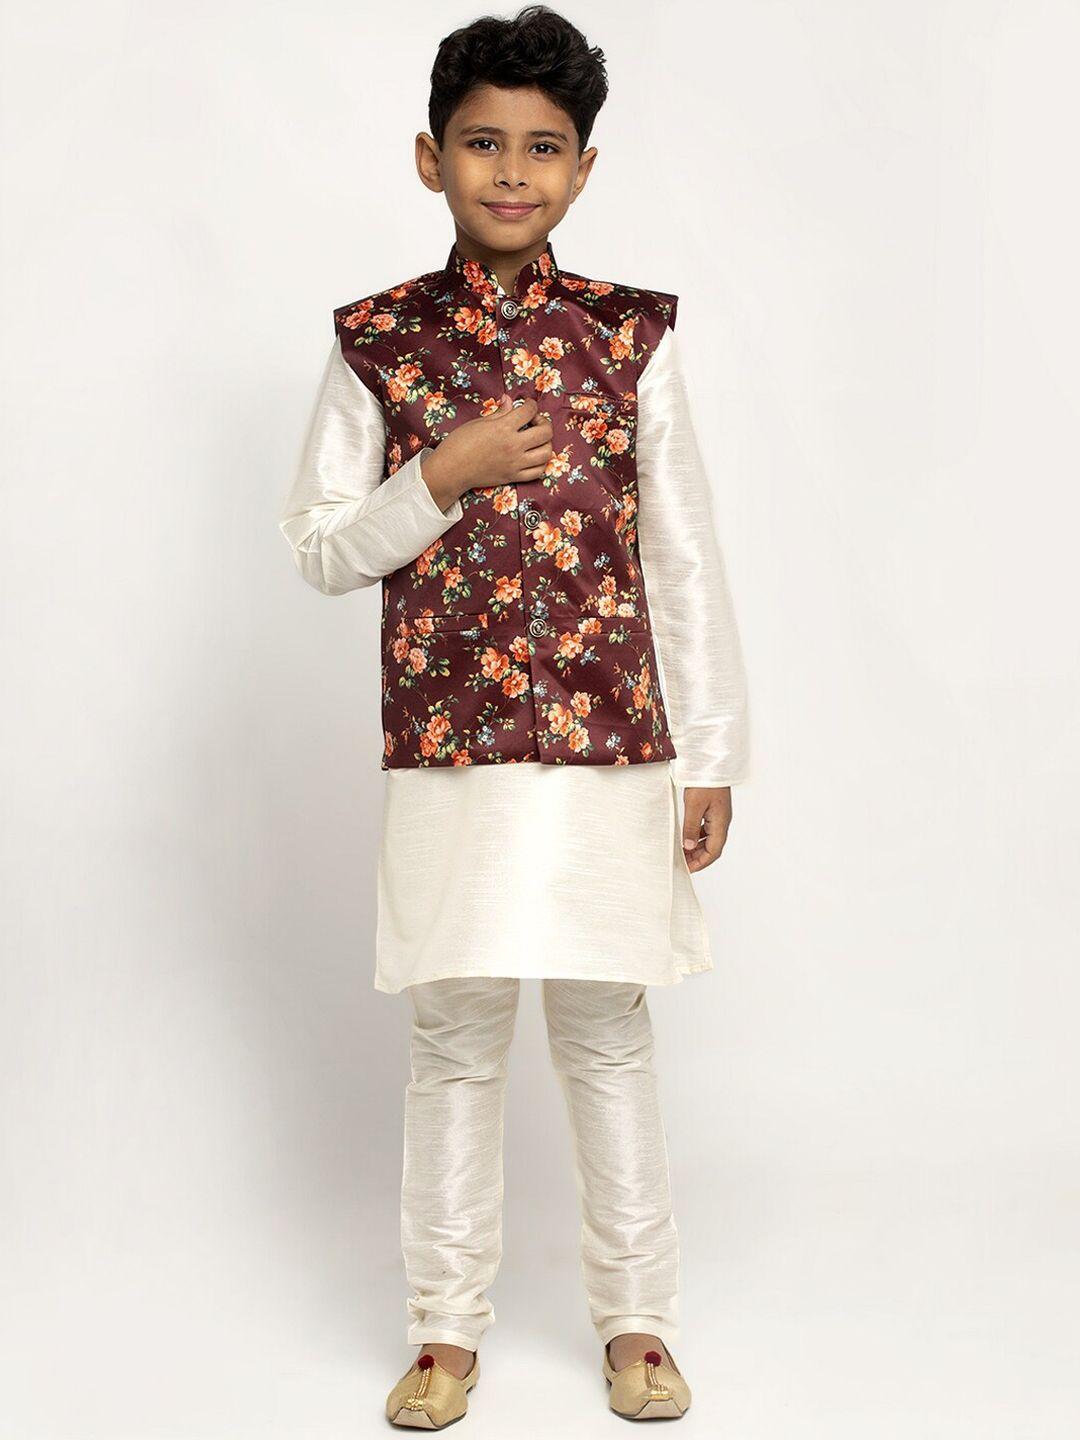 kraft india boys cream-coloured dupion silk kurta with churidar